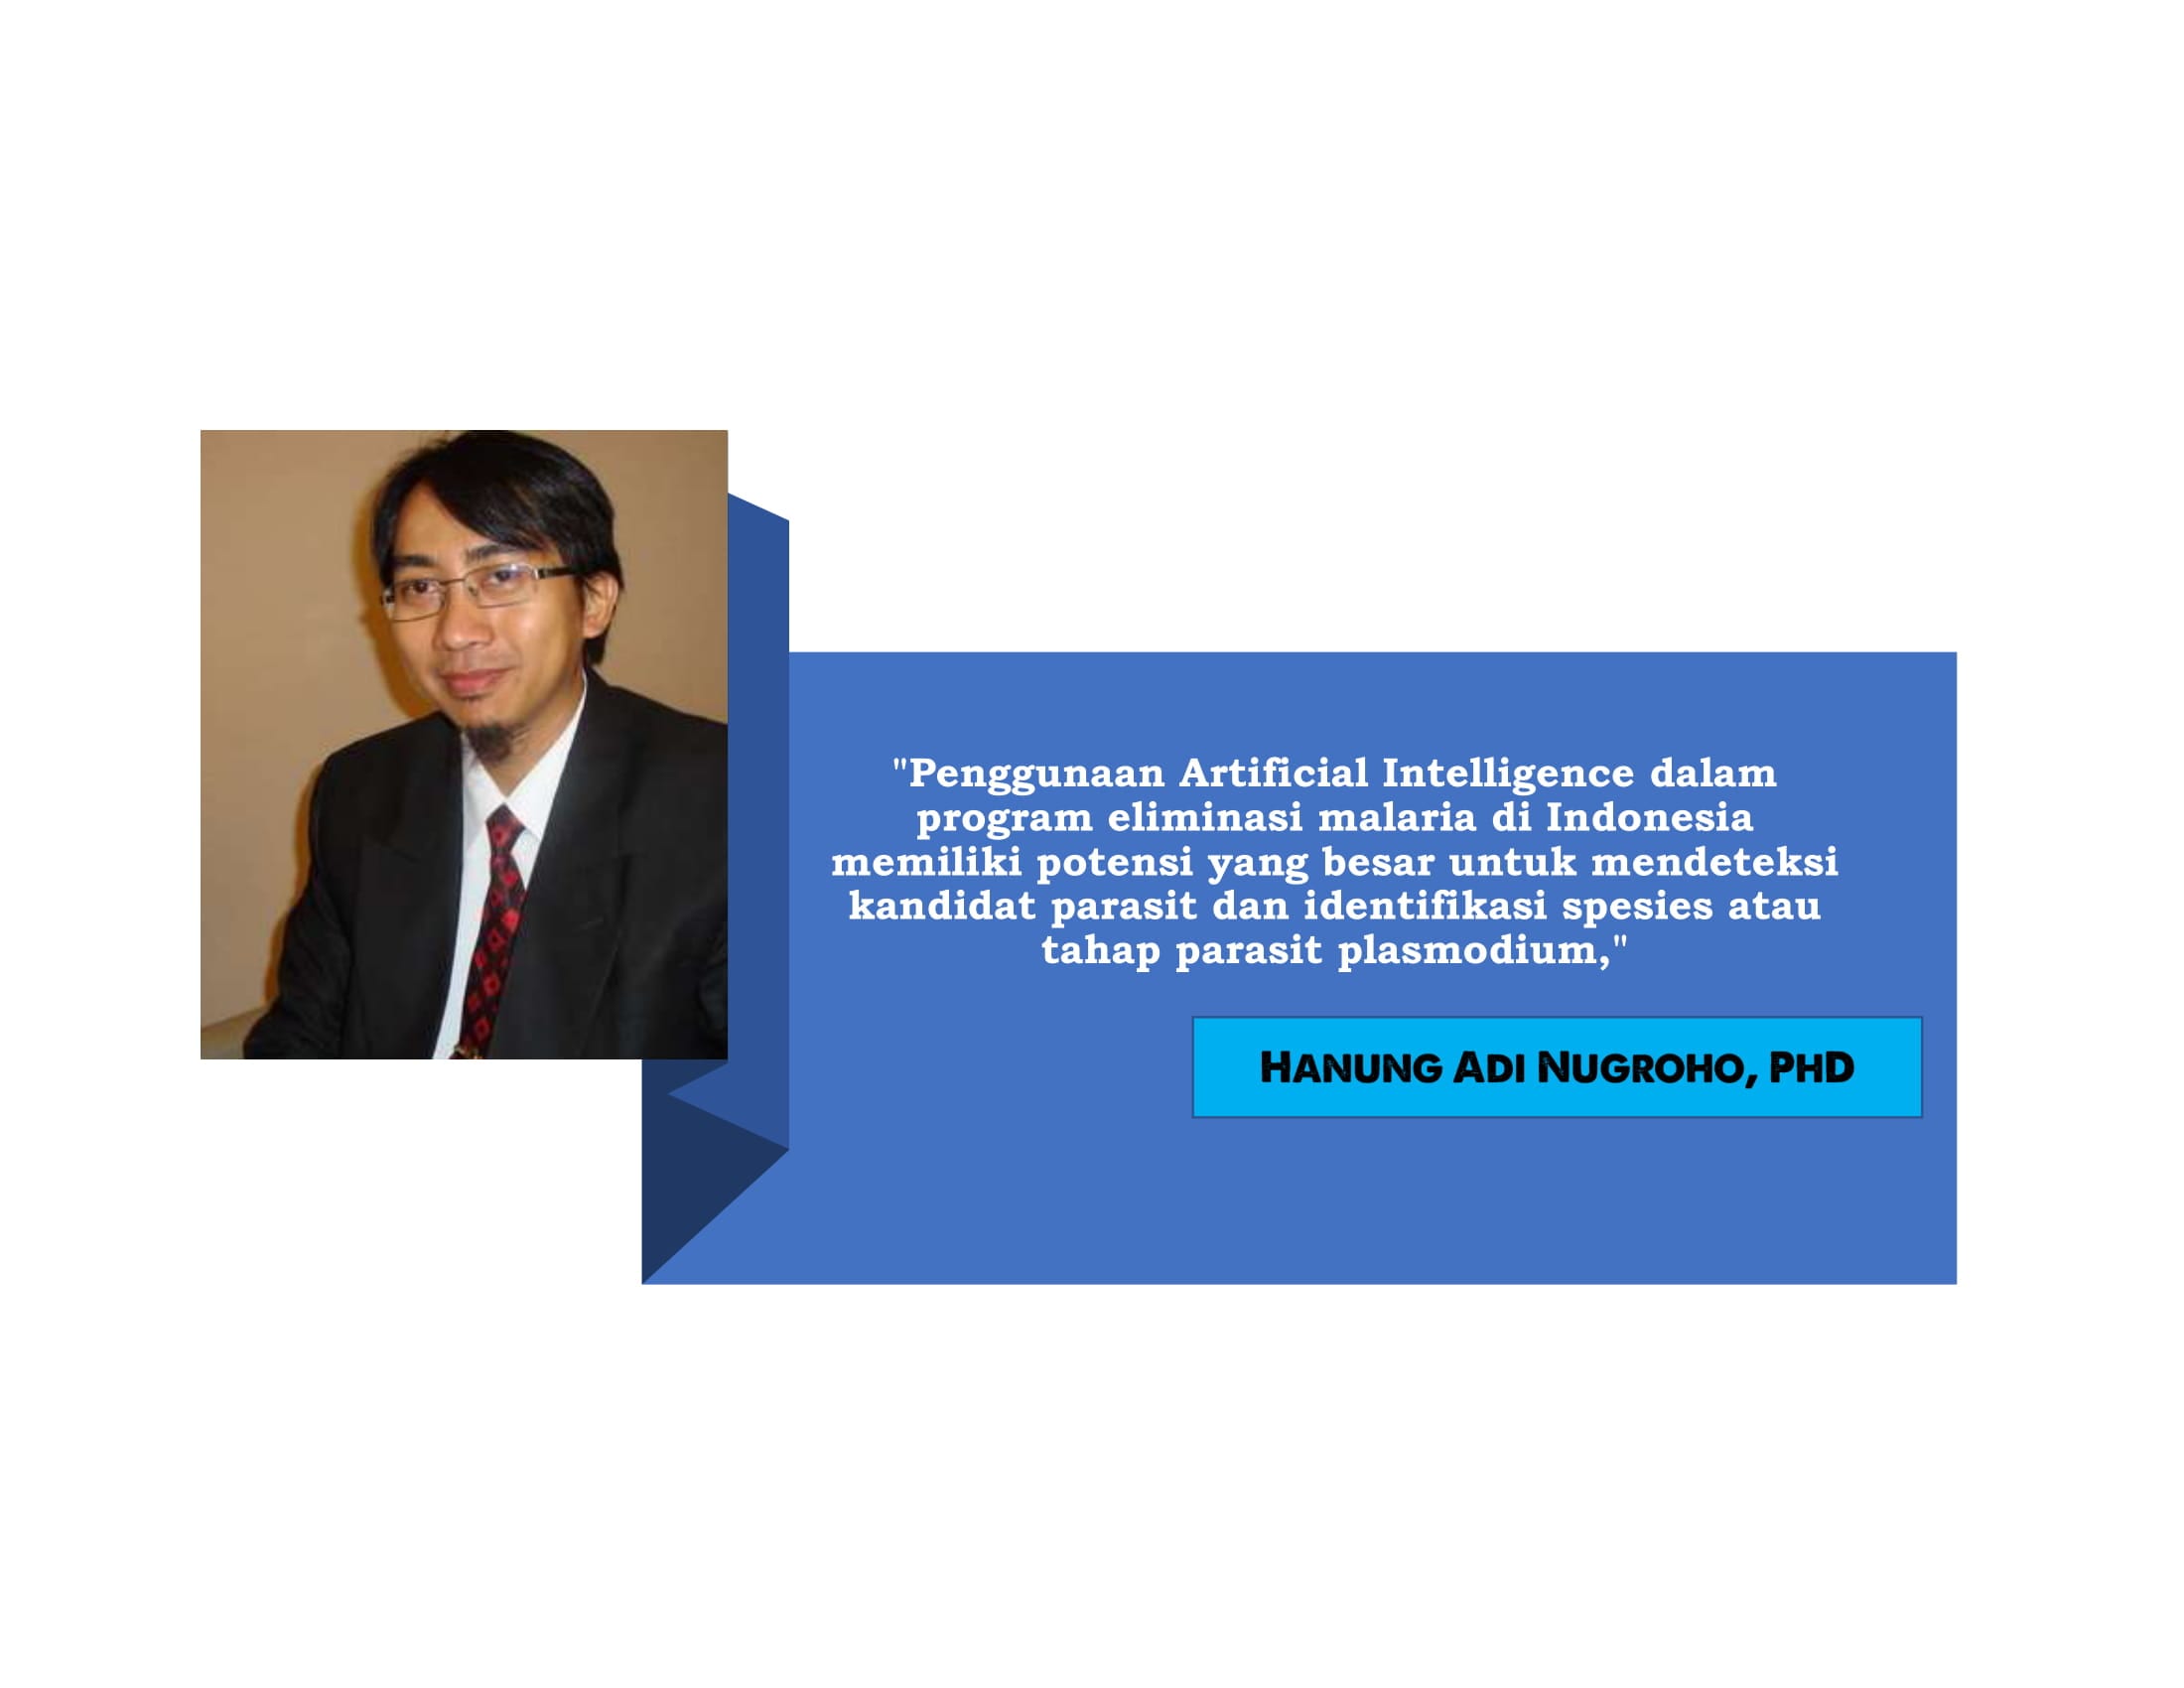 Hanung Adi Nugroho, PhD